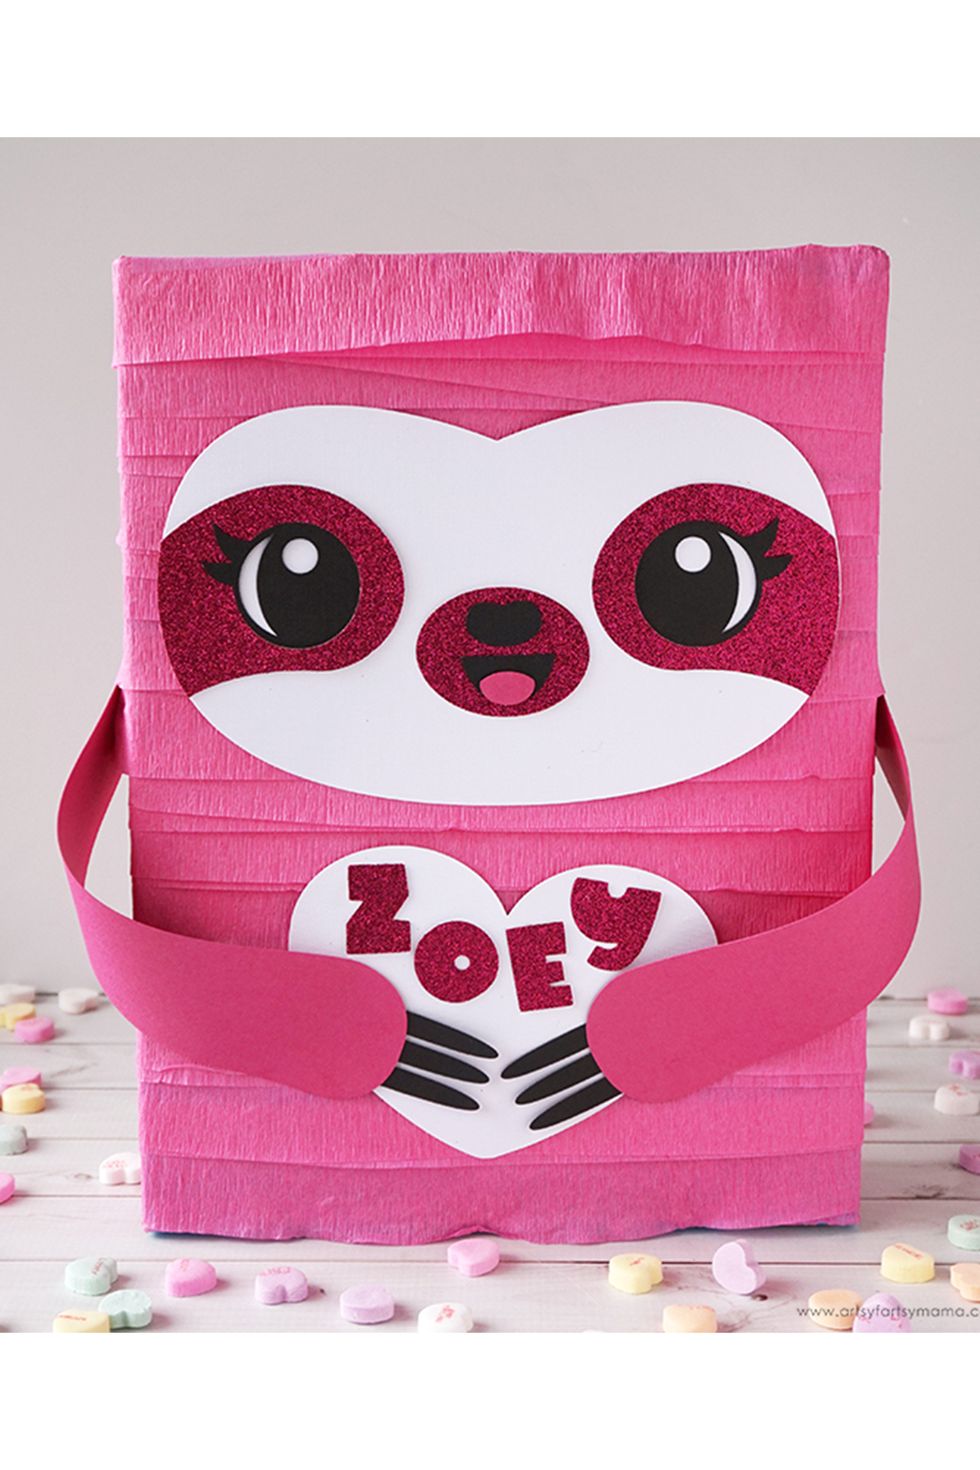 30 Best Valentine's Day Box Ideas for School 2022